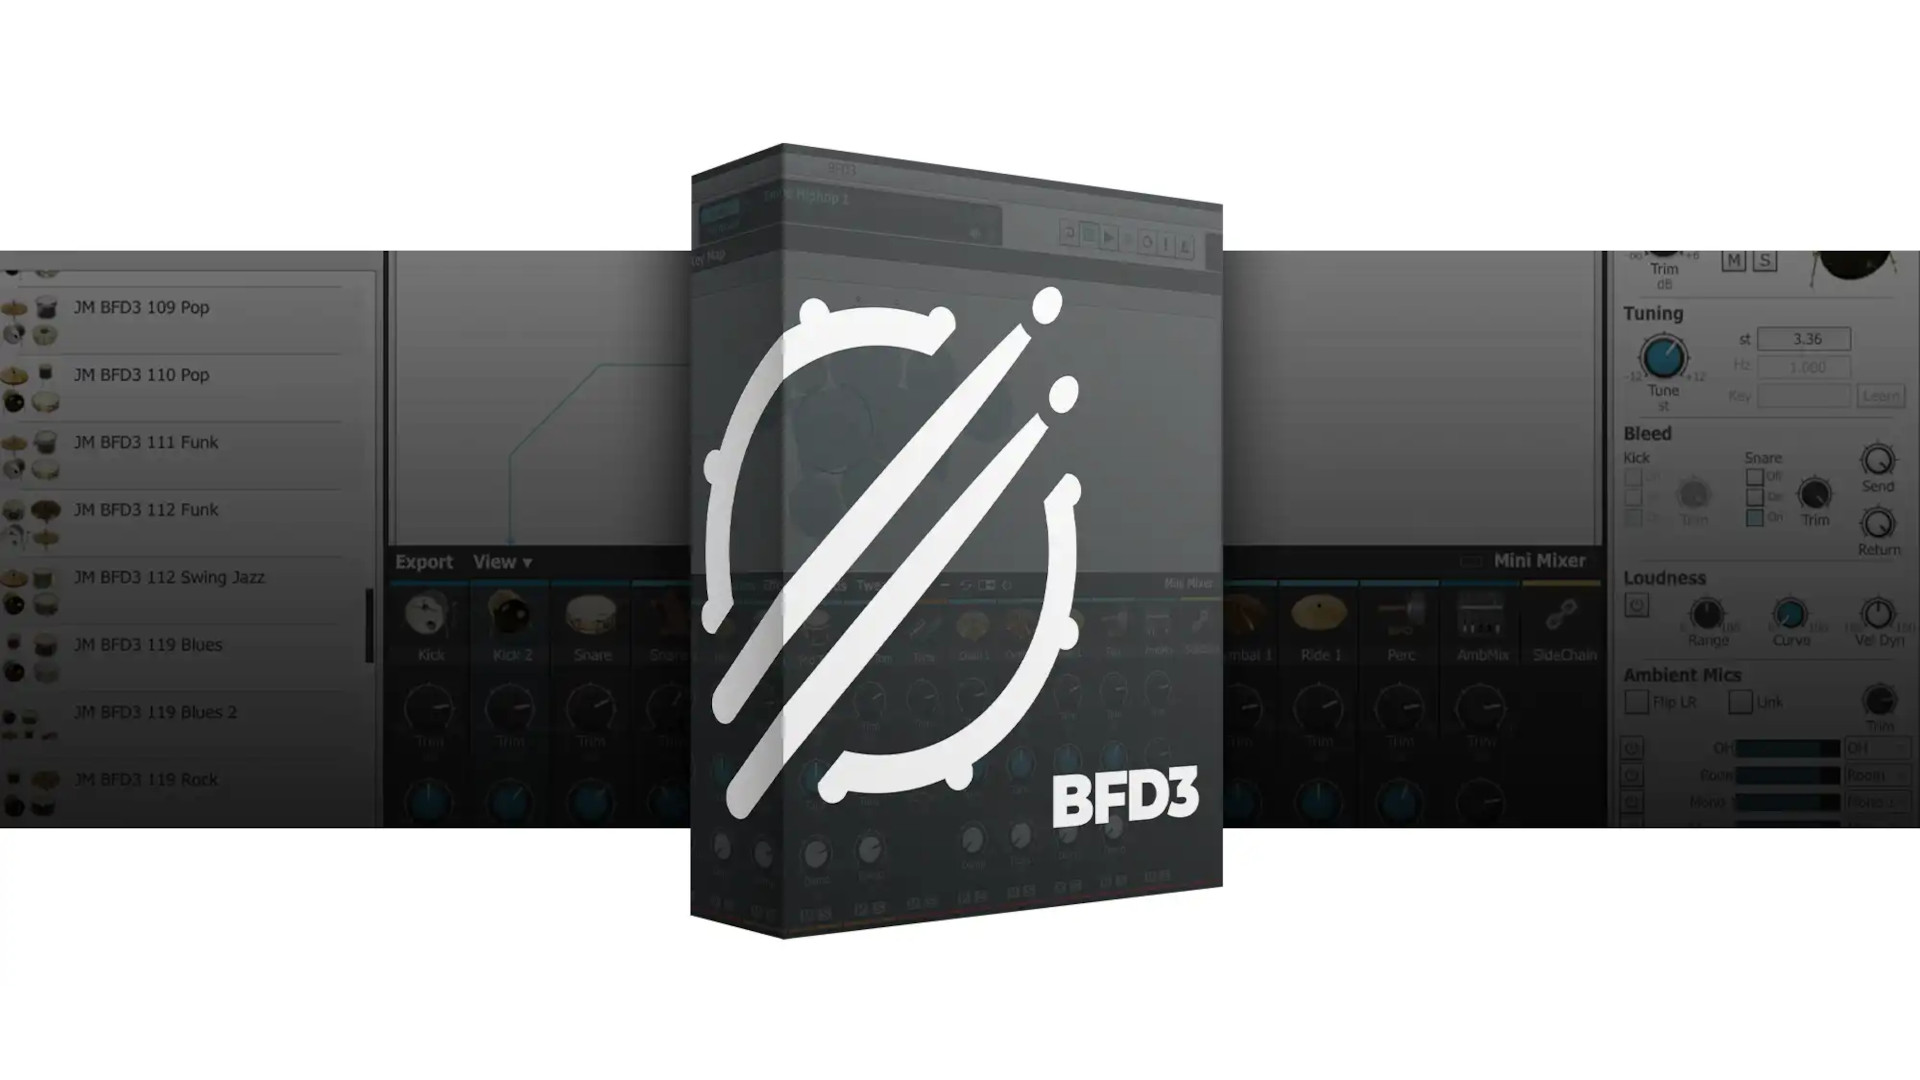 inmusic BFD3 PC/MAC CD Key, 100.57$